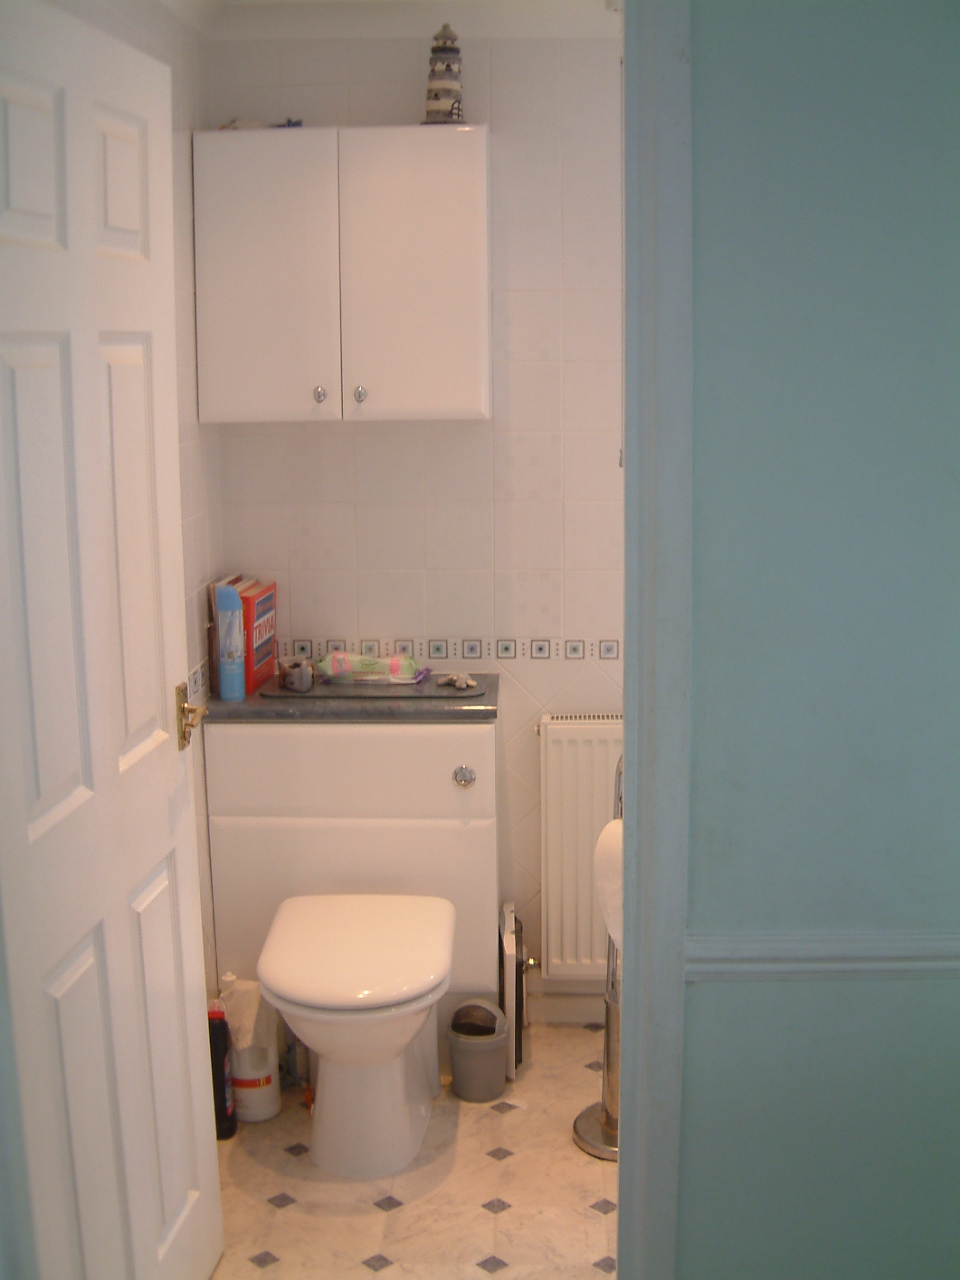 handyman in Plymstock, Plymouth bathroom renovation 03